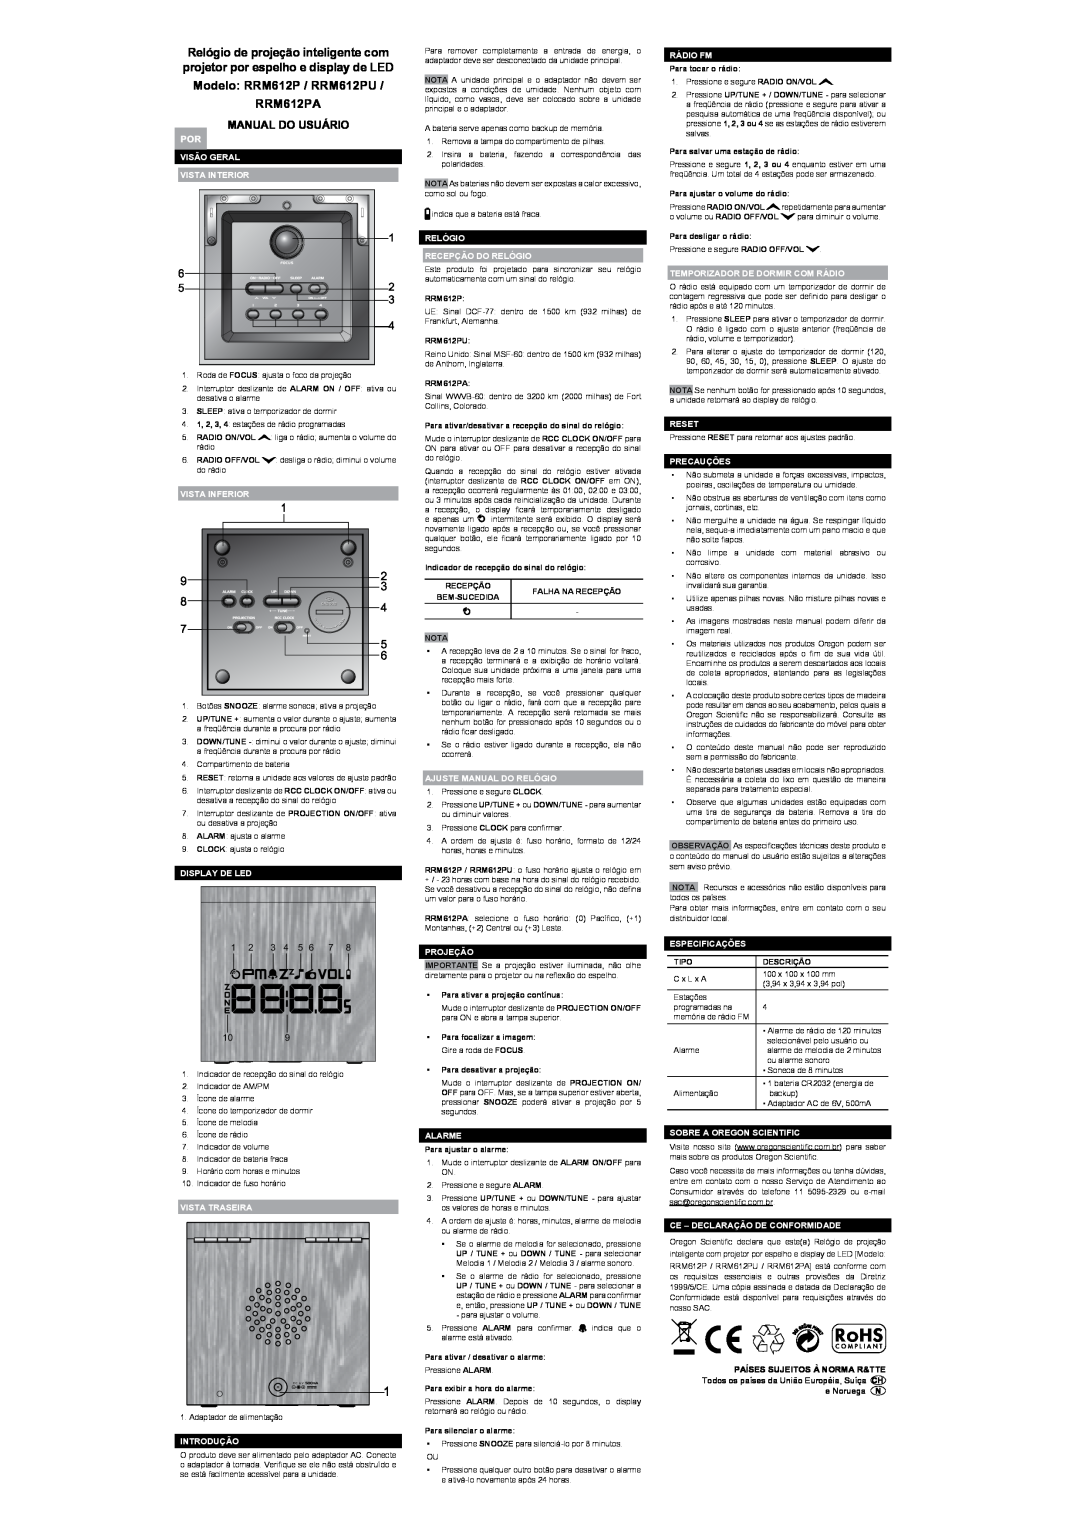 Oregon Scientific user manual Manual Do Usuário, Modelo RRM612P / RRM612PU RRM612PA 